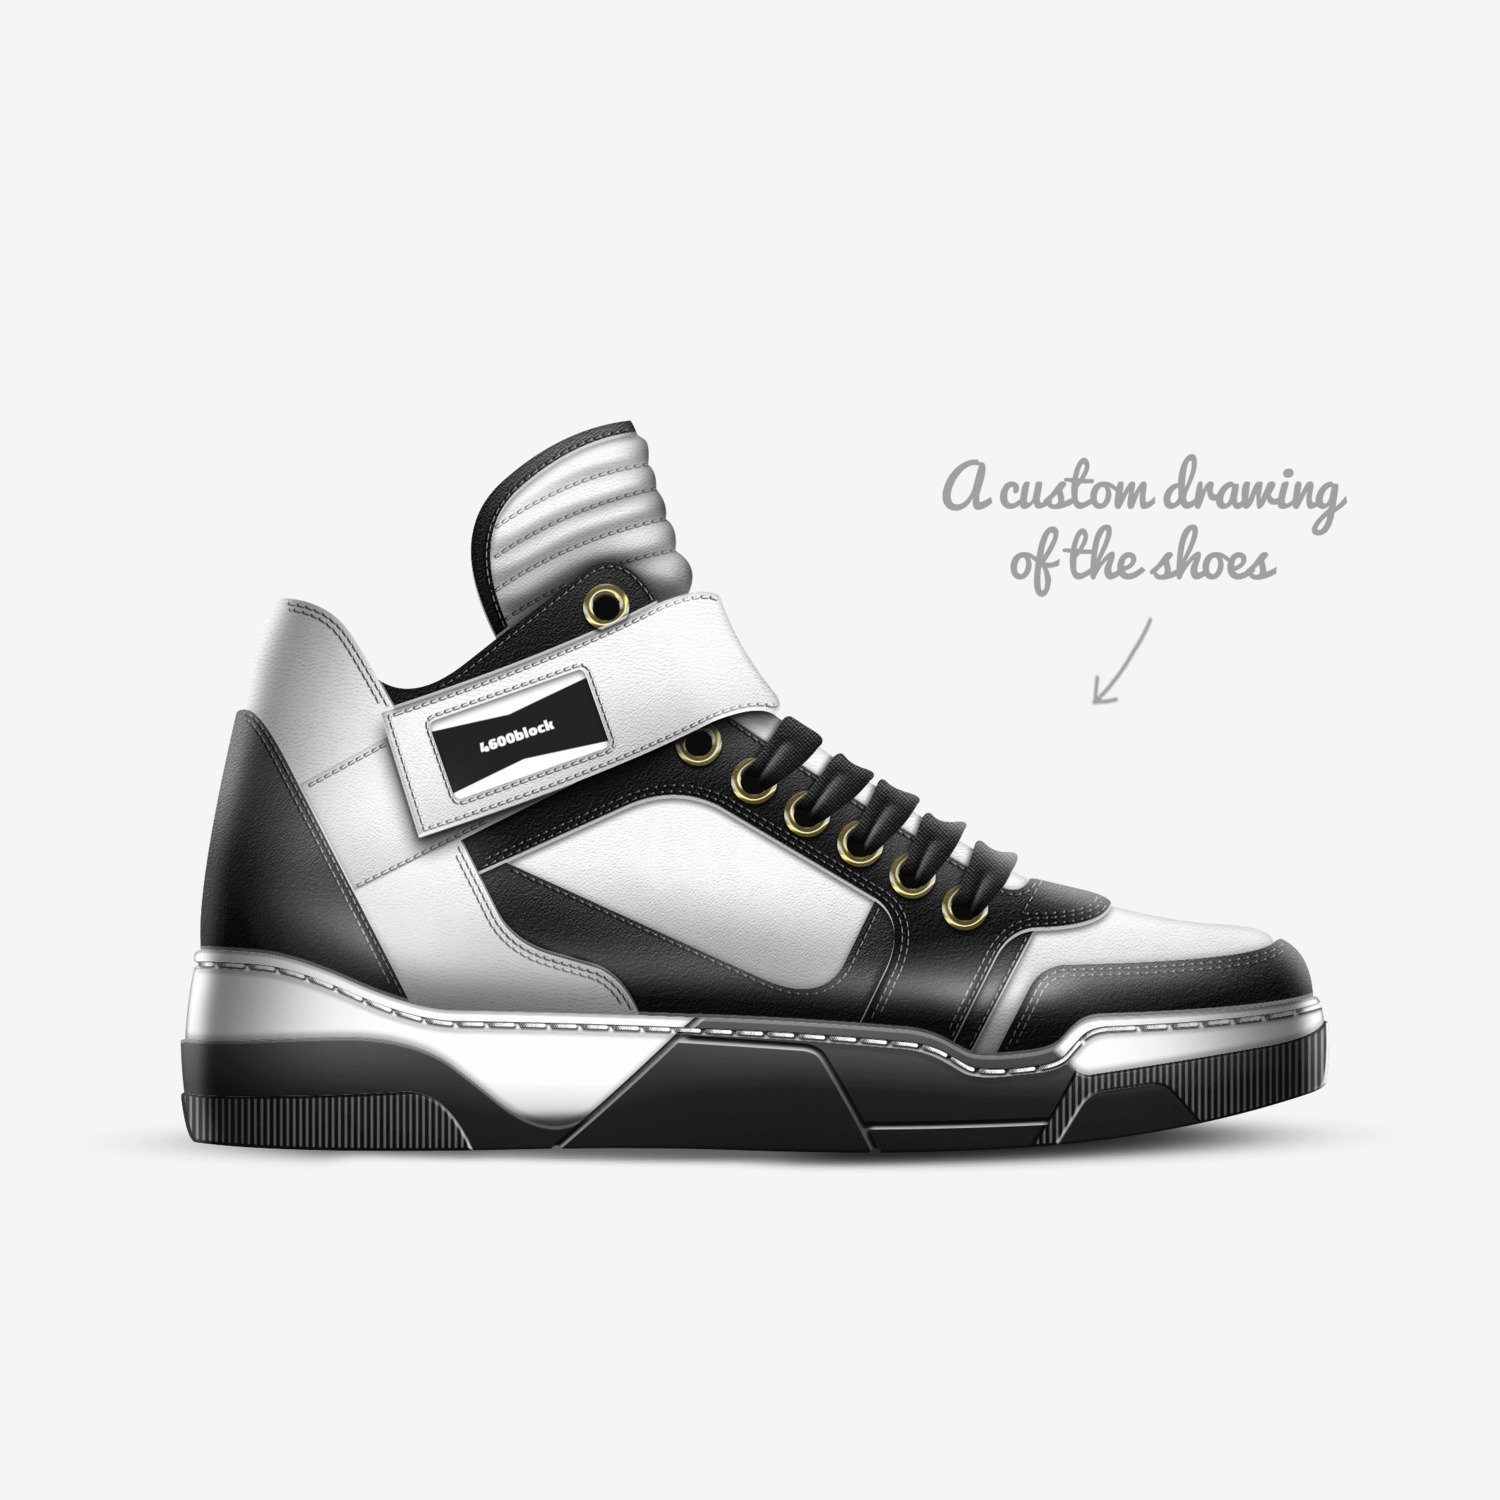 Blive kold evigt elegant Eazy e's | A Custom Shoe concept by Nick Salazar